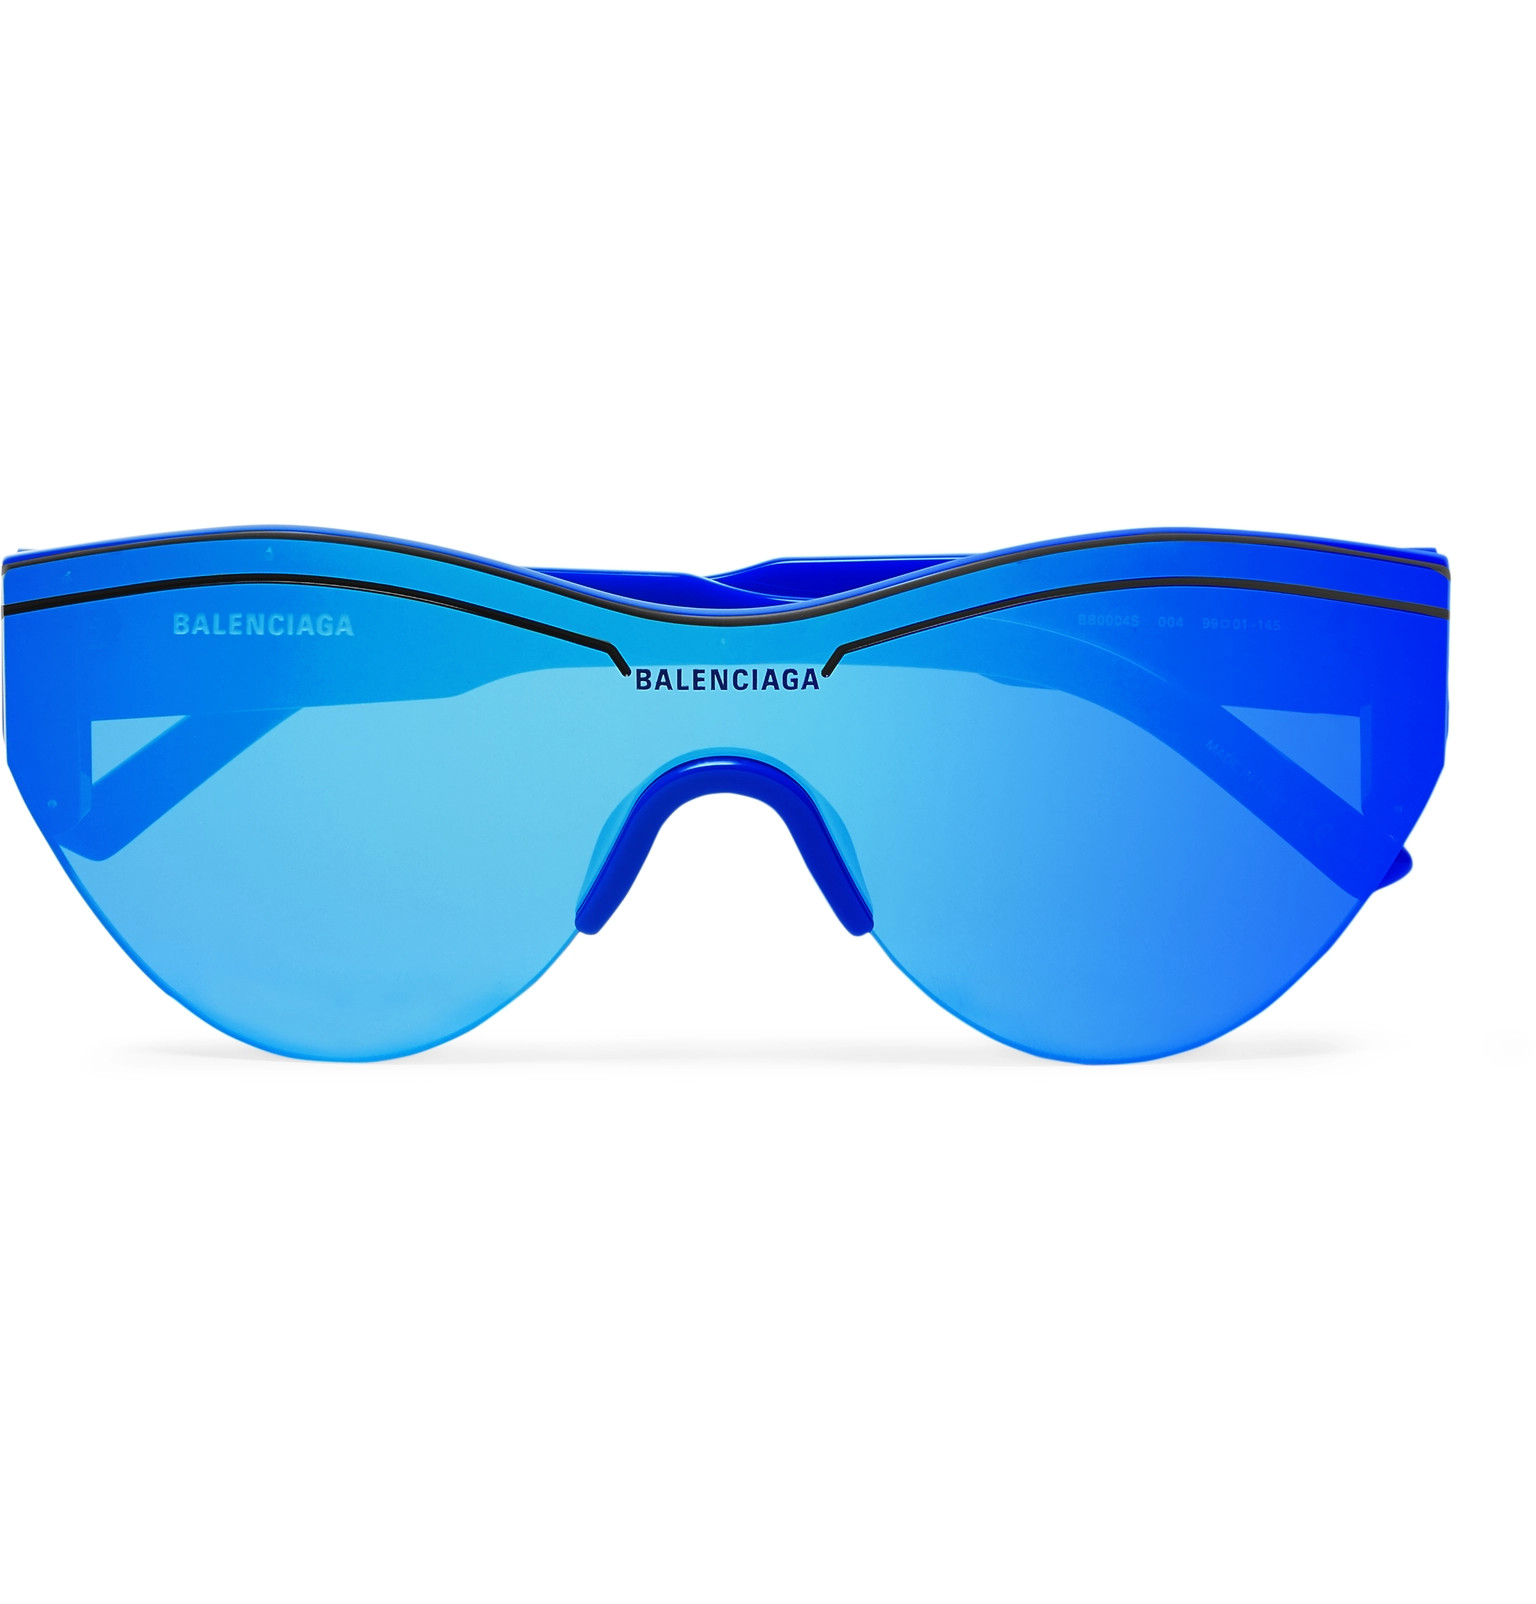 Balenciaga - Round-Frame Acetate Mirrored Sunglasses - Men - Blue | The